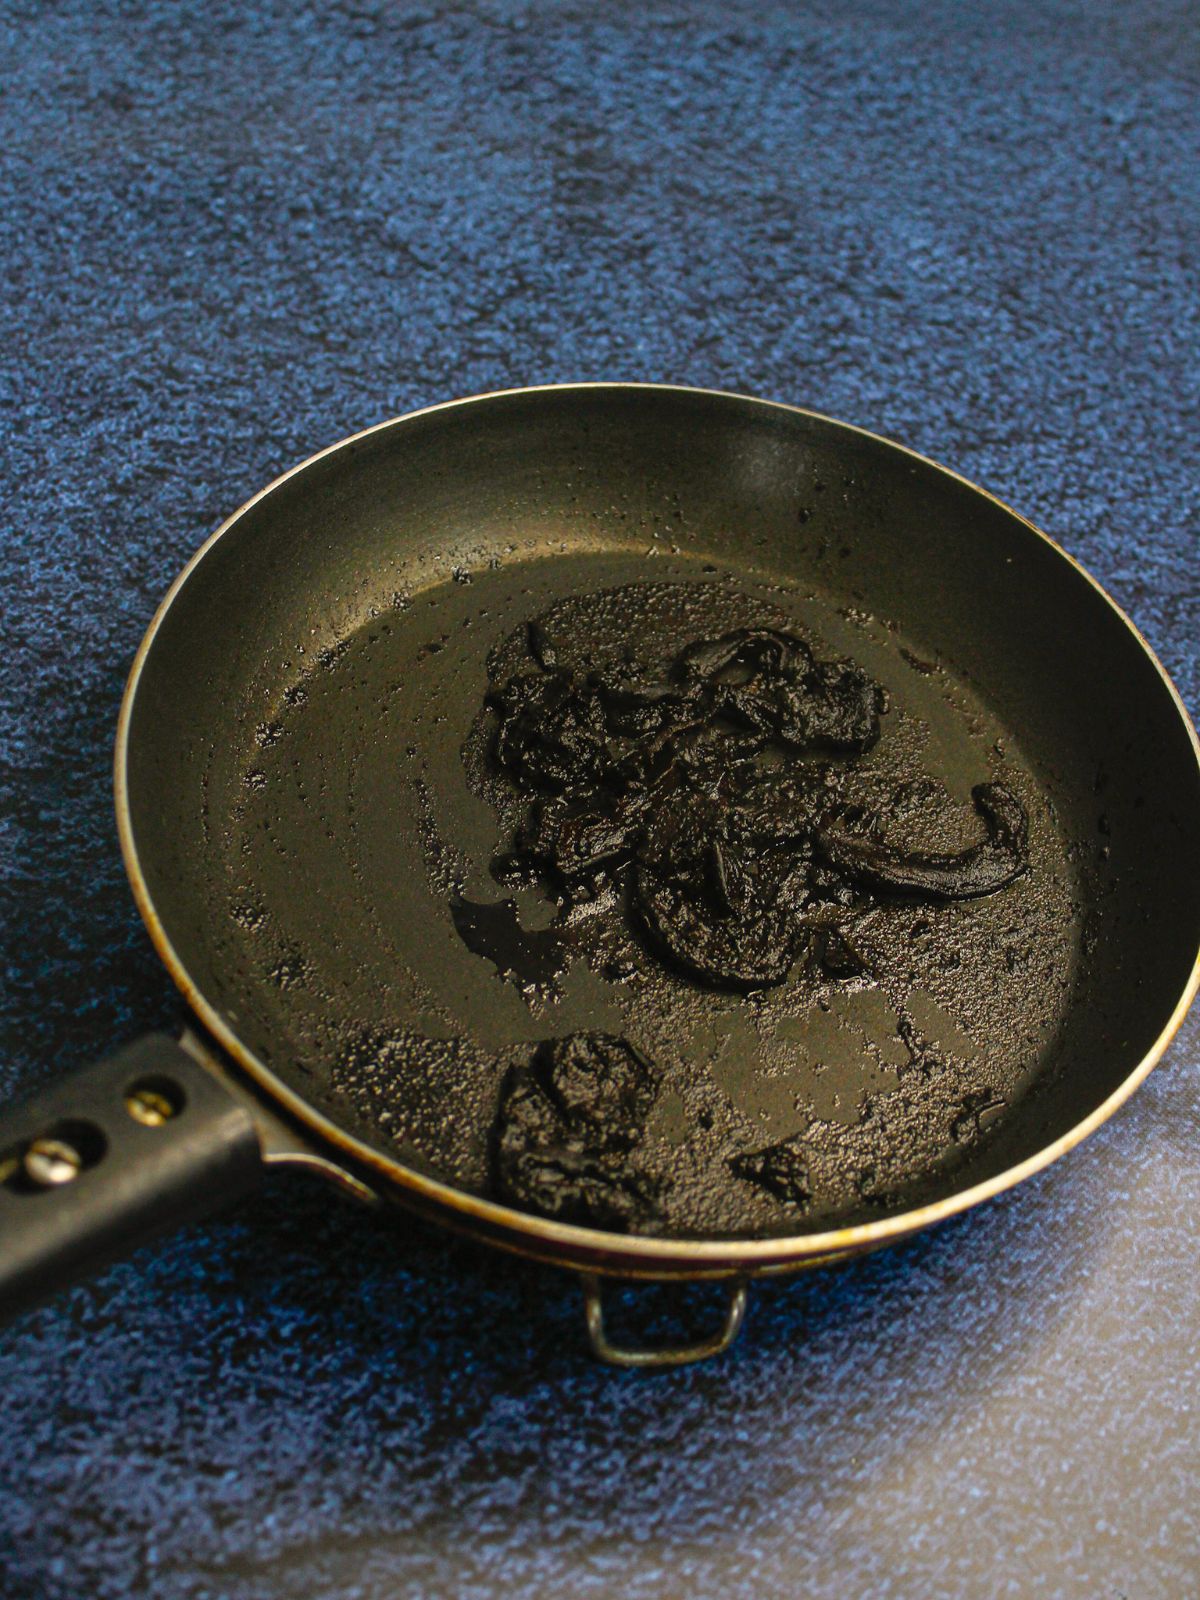 voil goroka in a pan